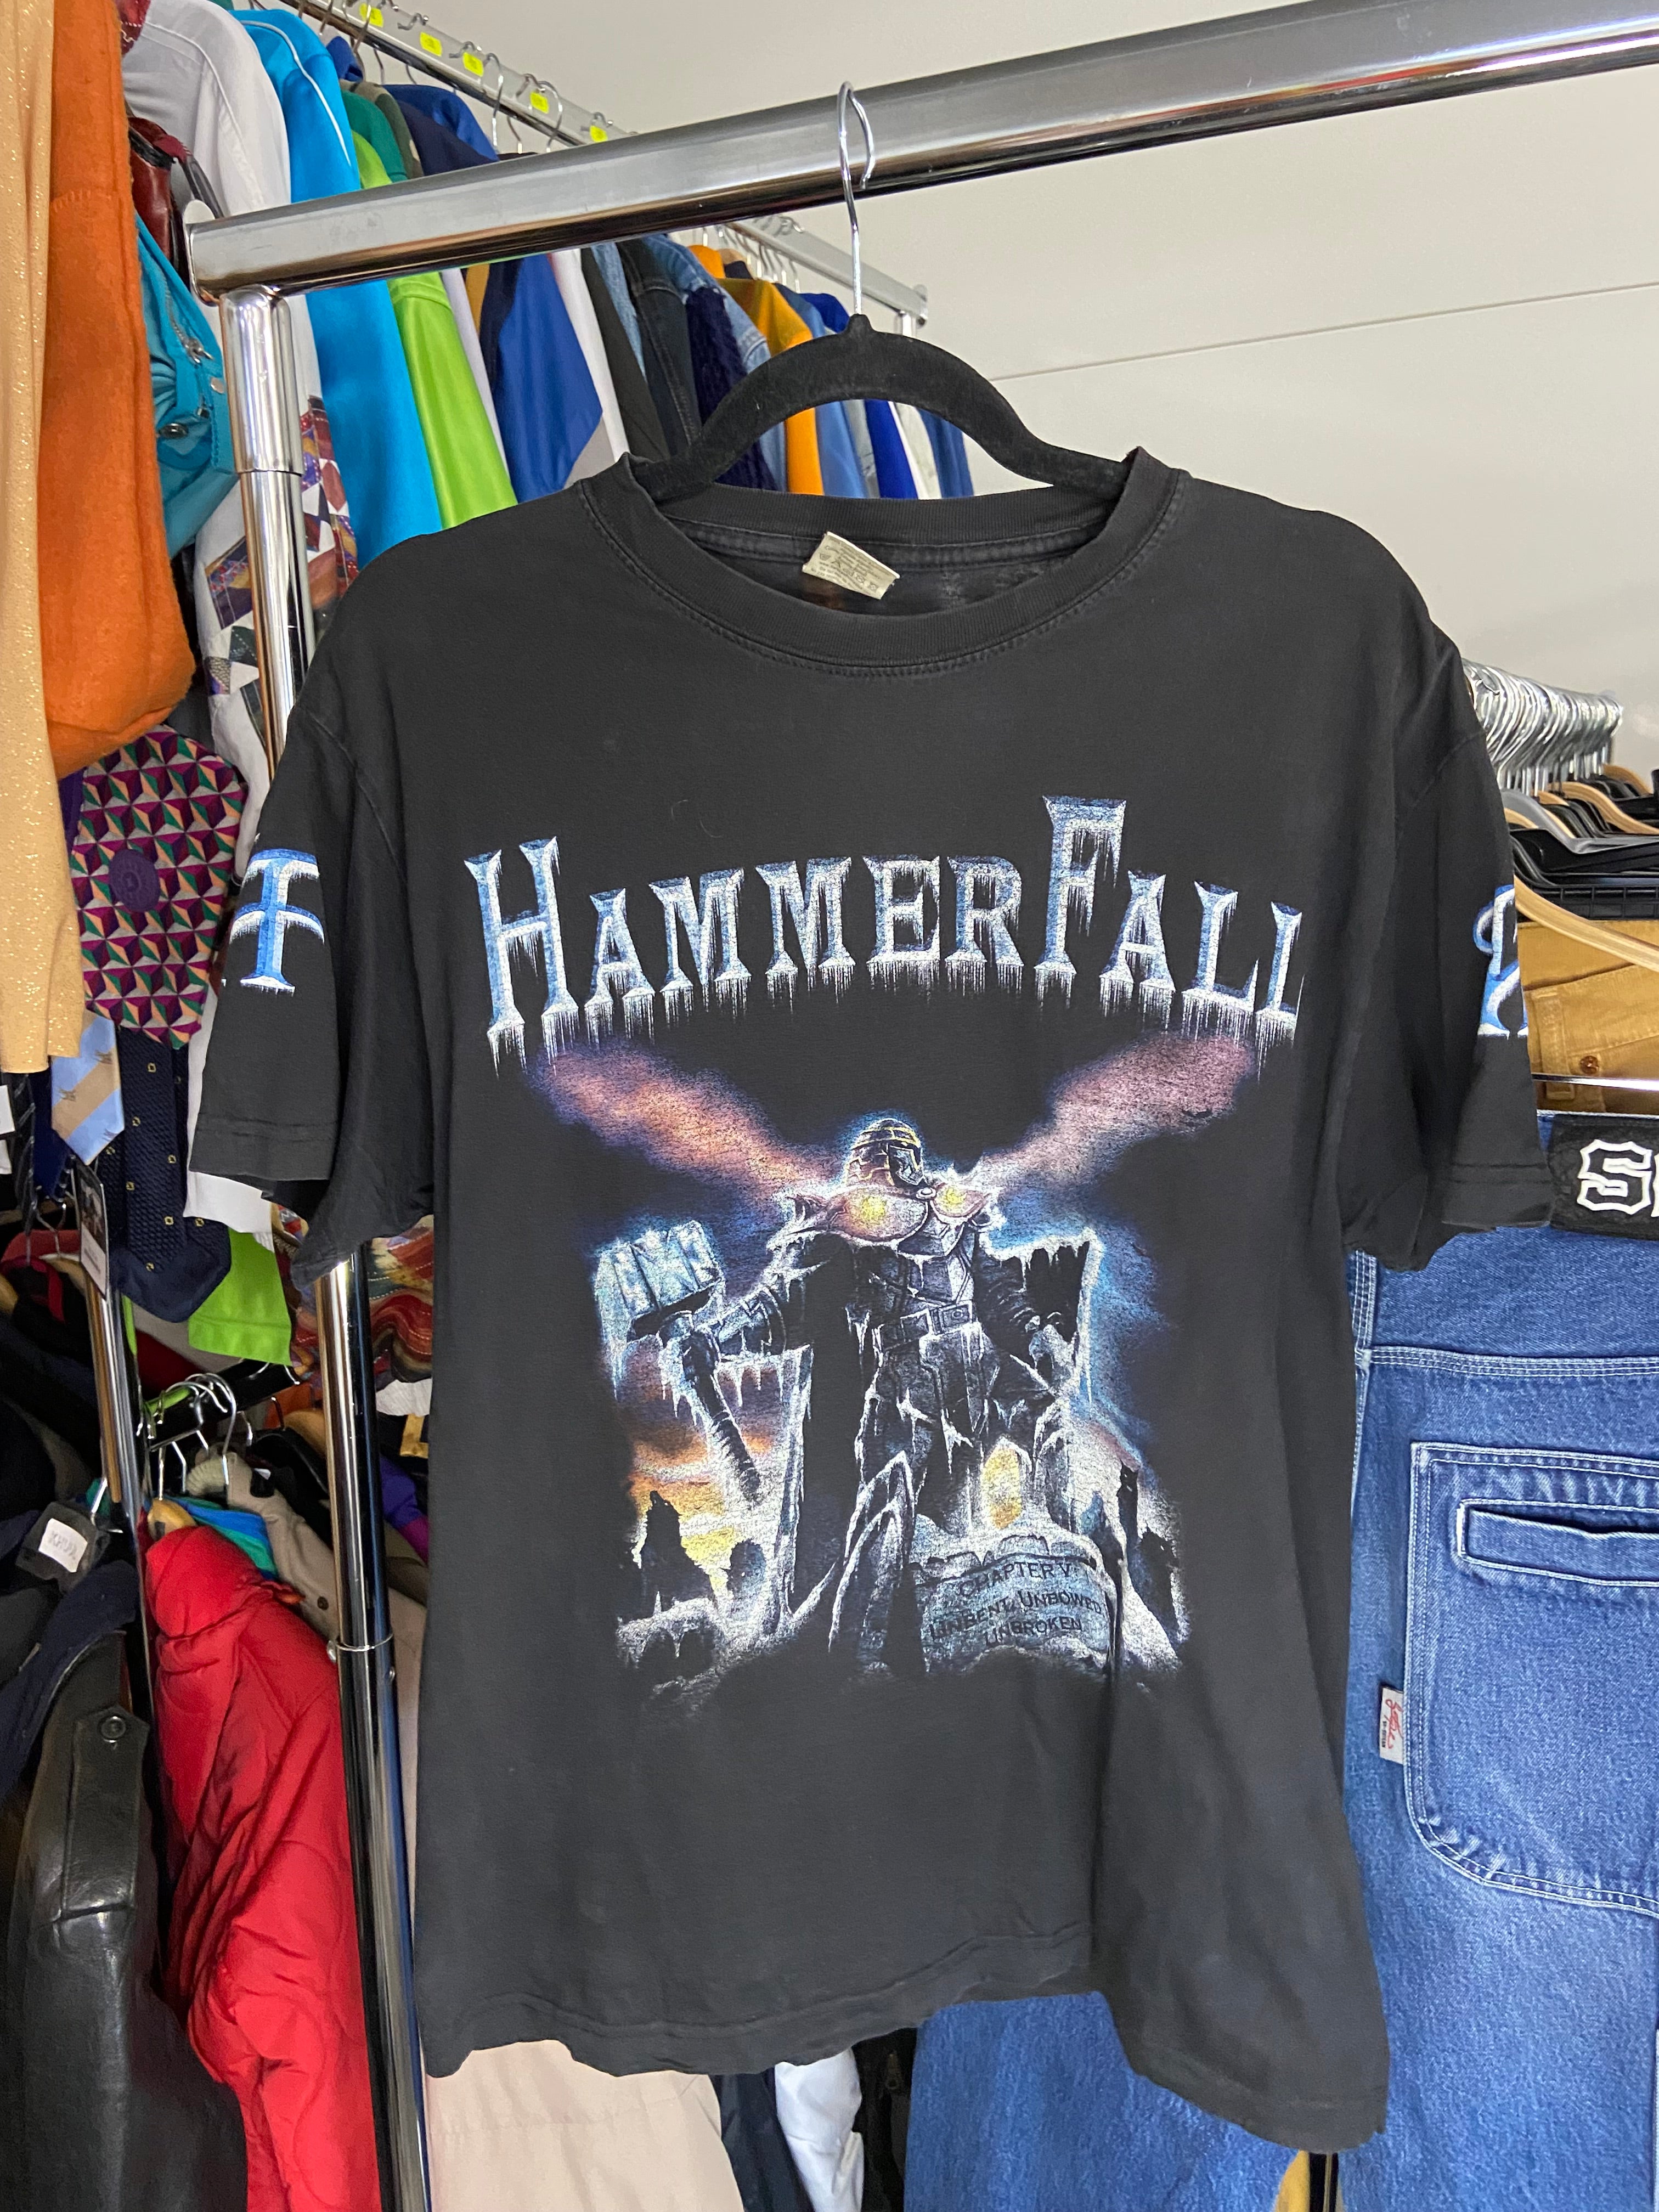 Hammer Fall Short Sleeve Shirt Mens M Black Cotton Band